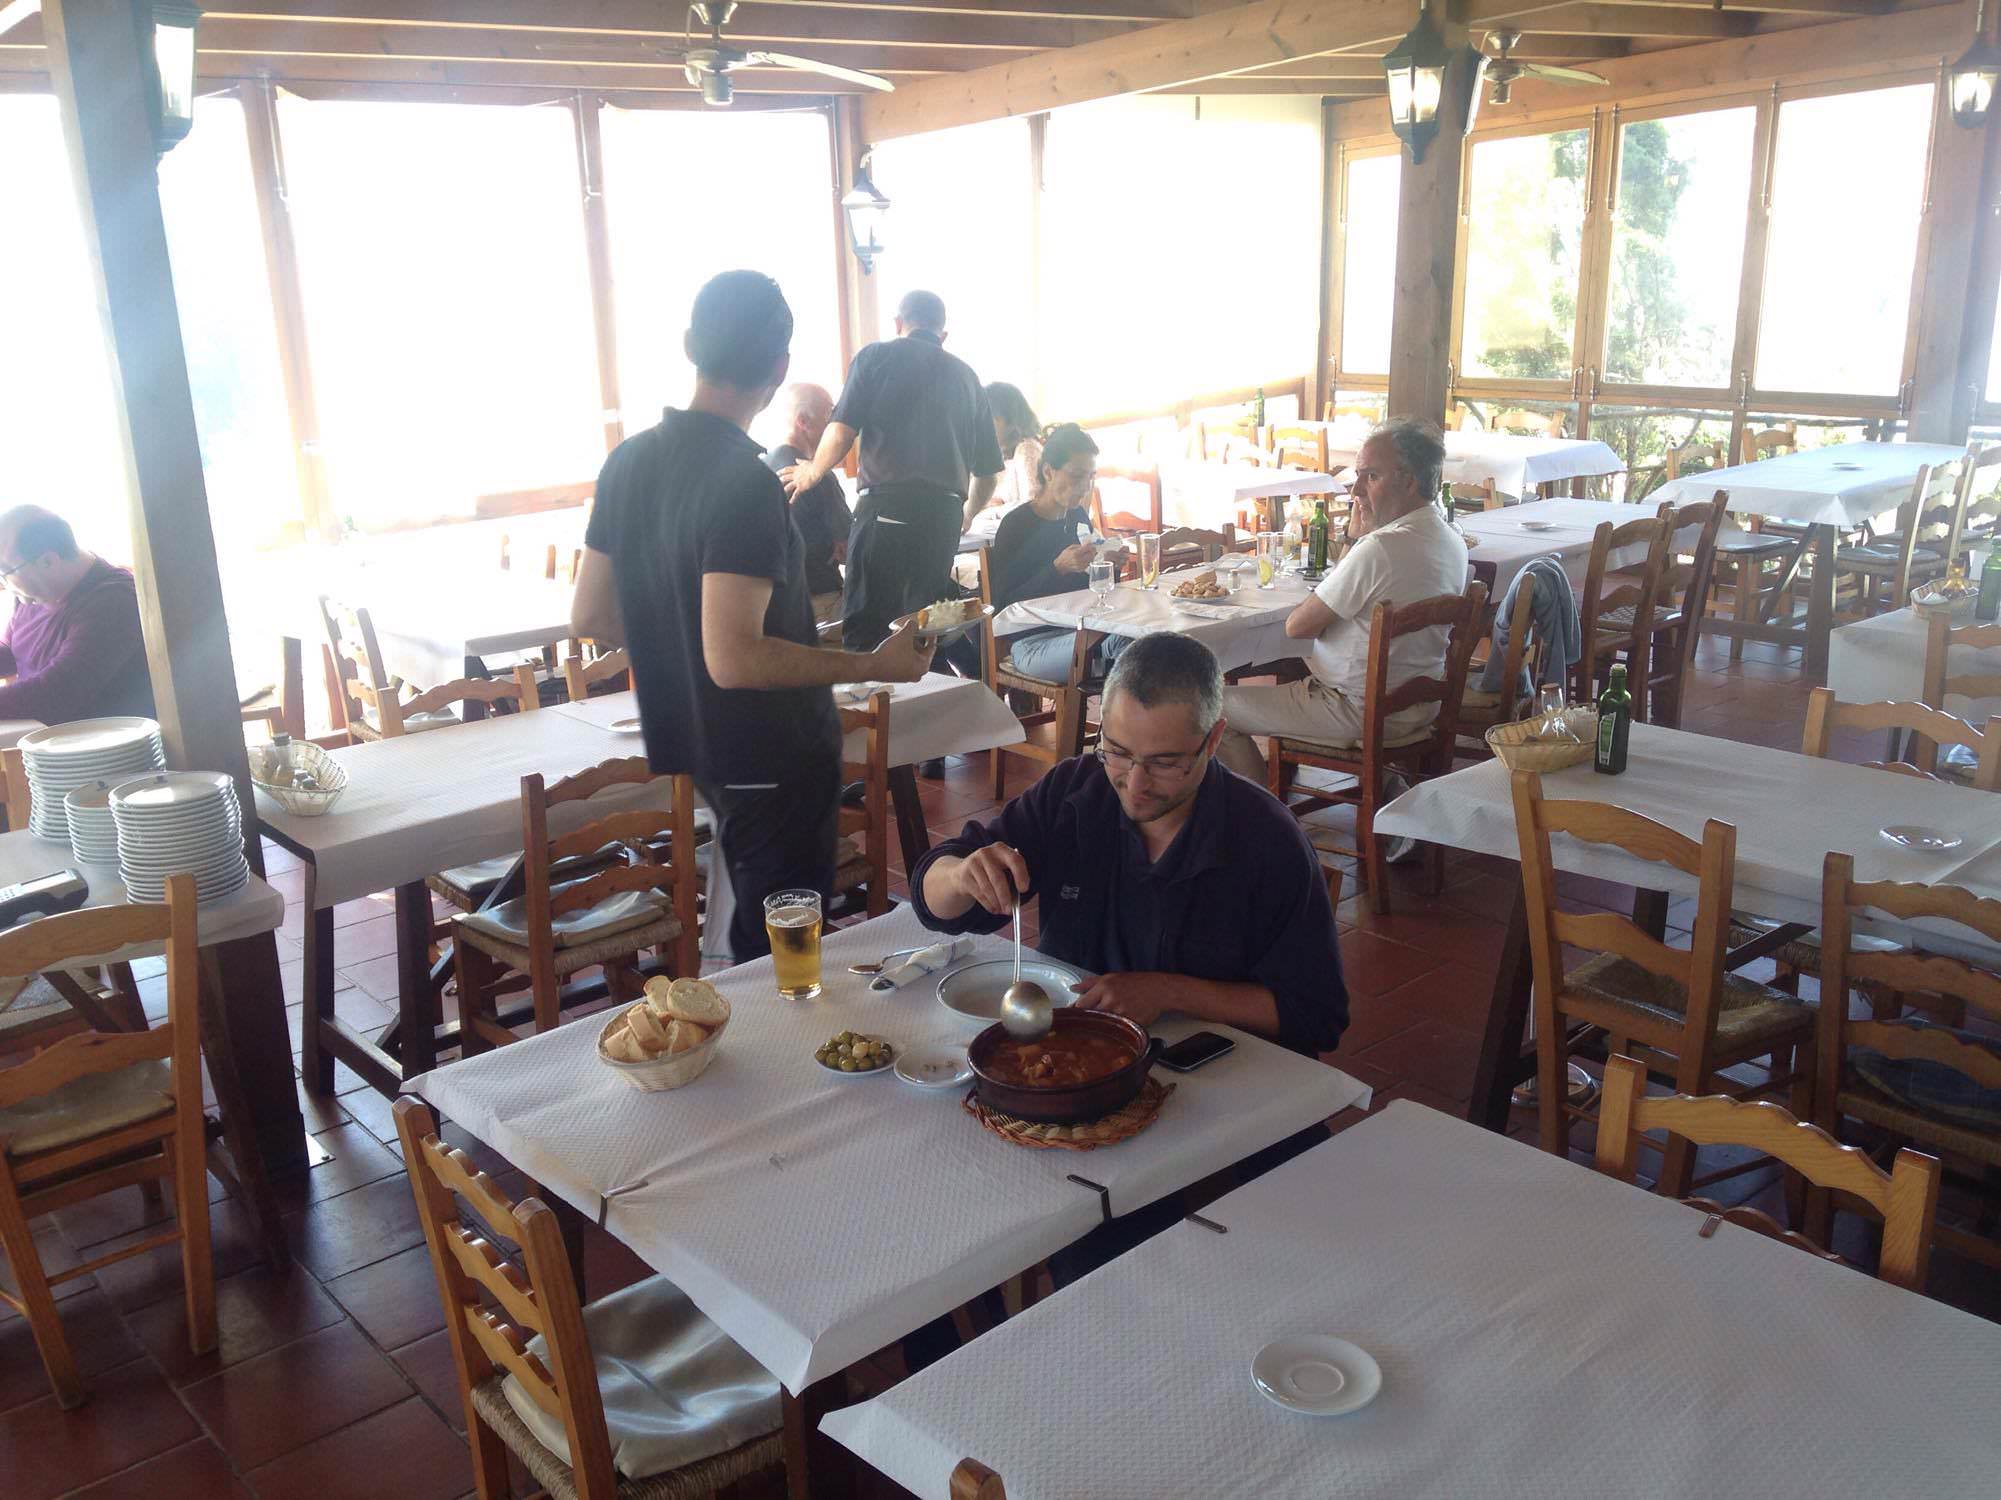 Two Monkeys Travel - restaurants in Menorca 6 - Dining under the windmill at Es Moli d'es Raco